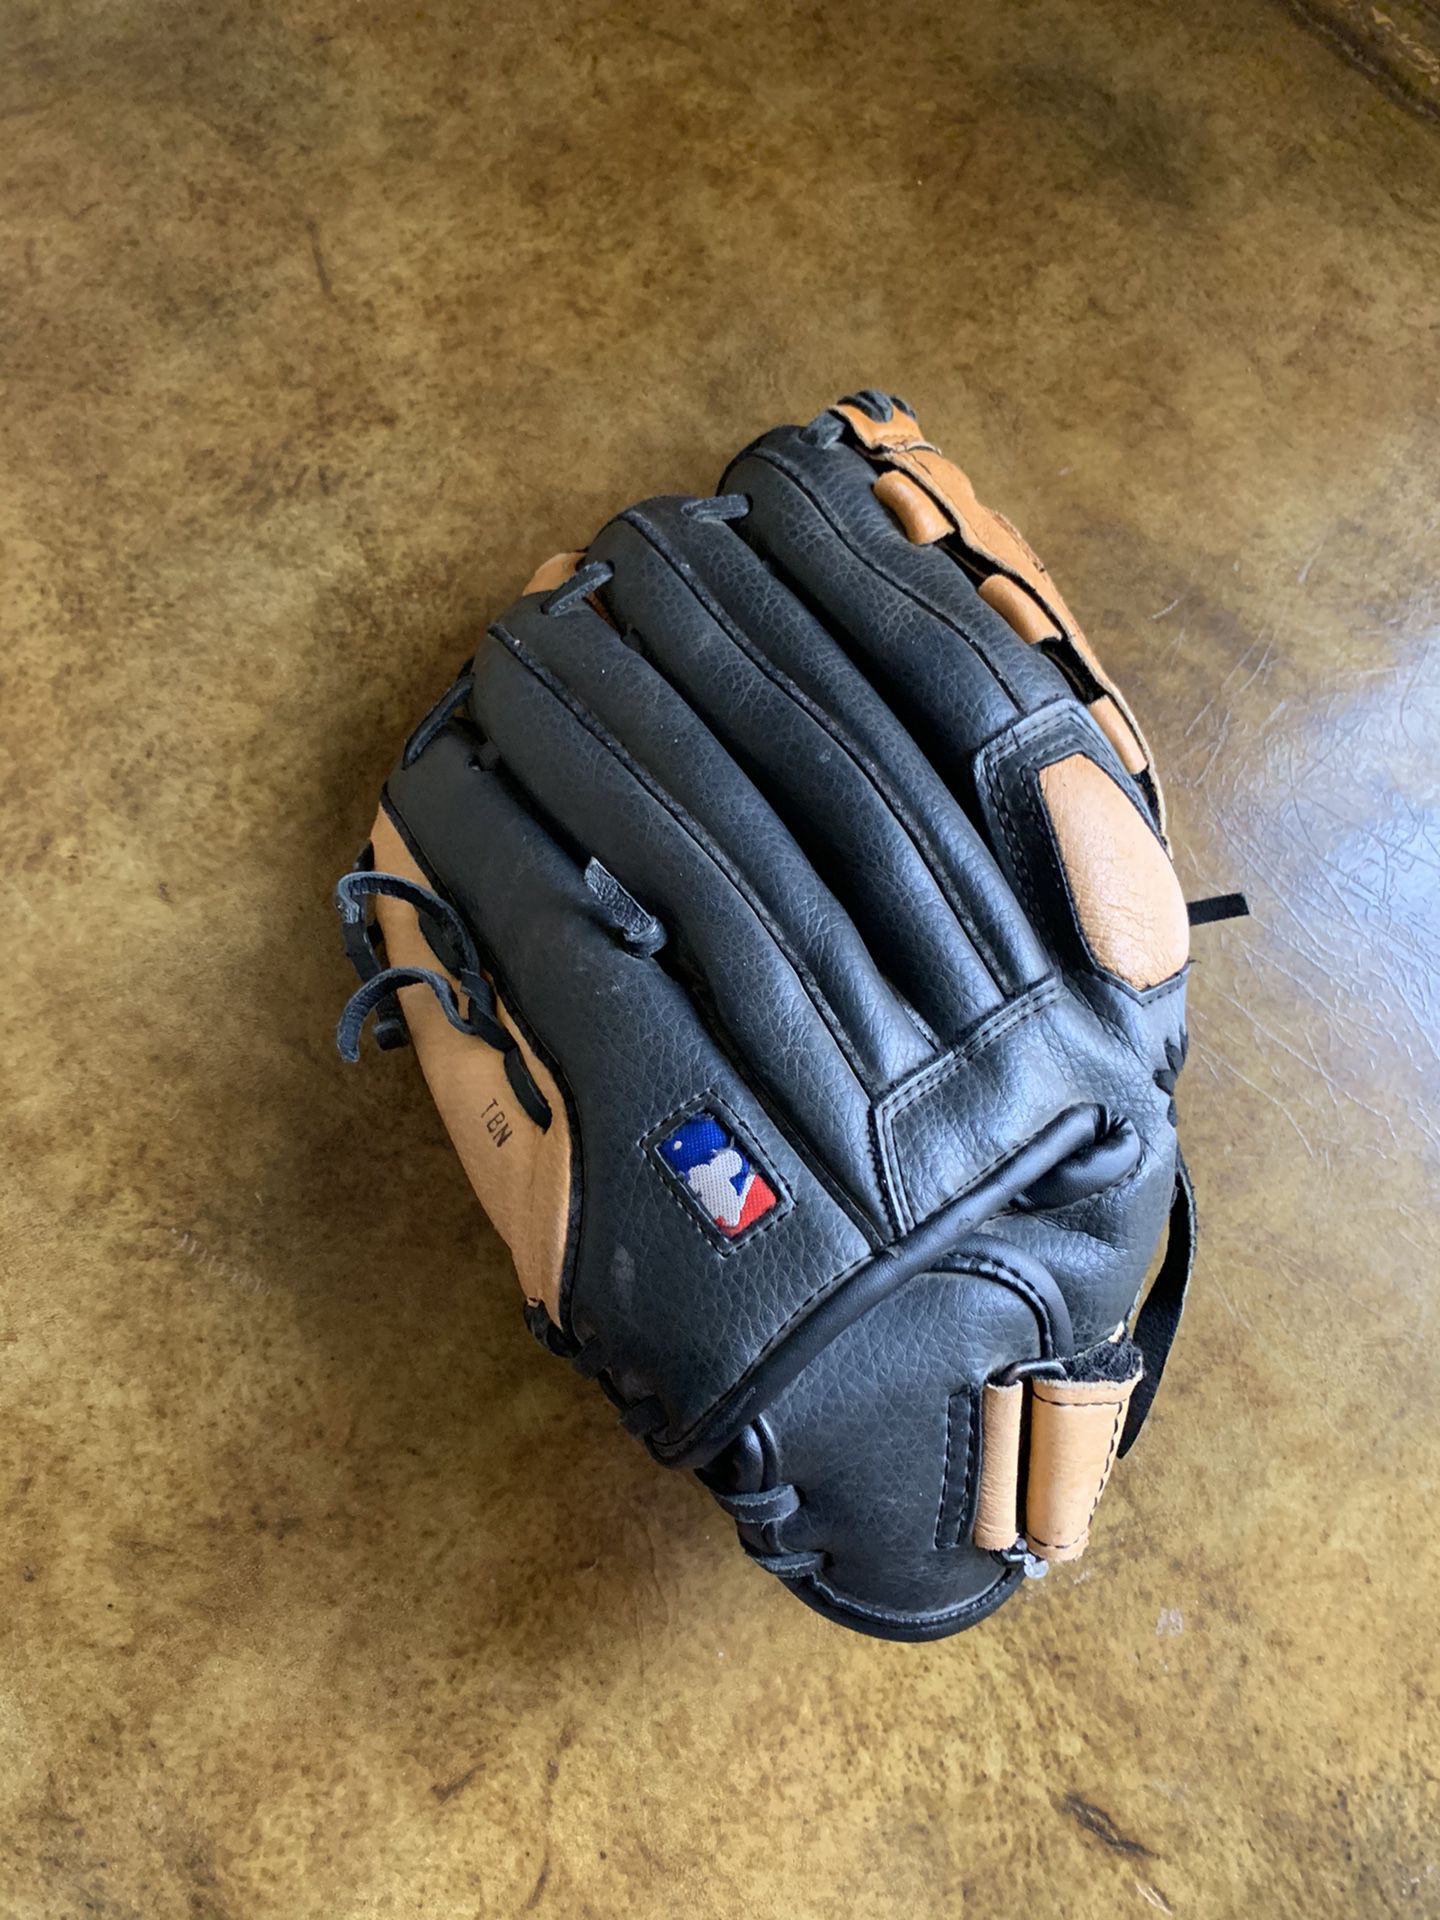 Wilson A0350 TMLB11 11” baseball glove RHT